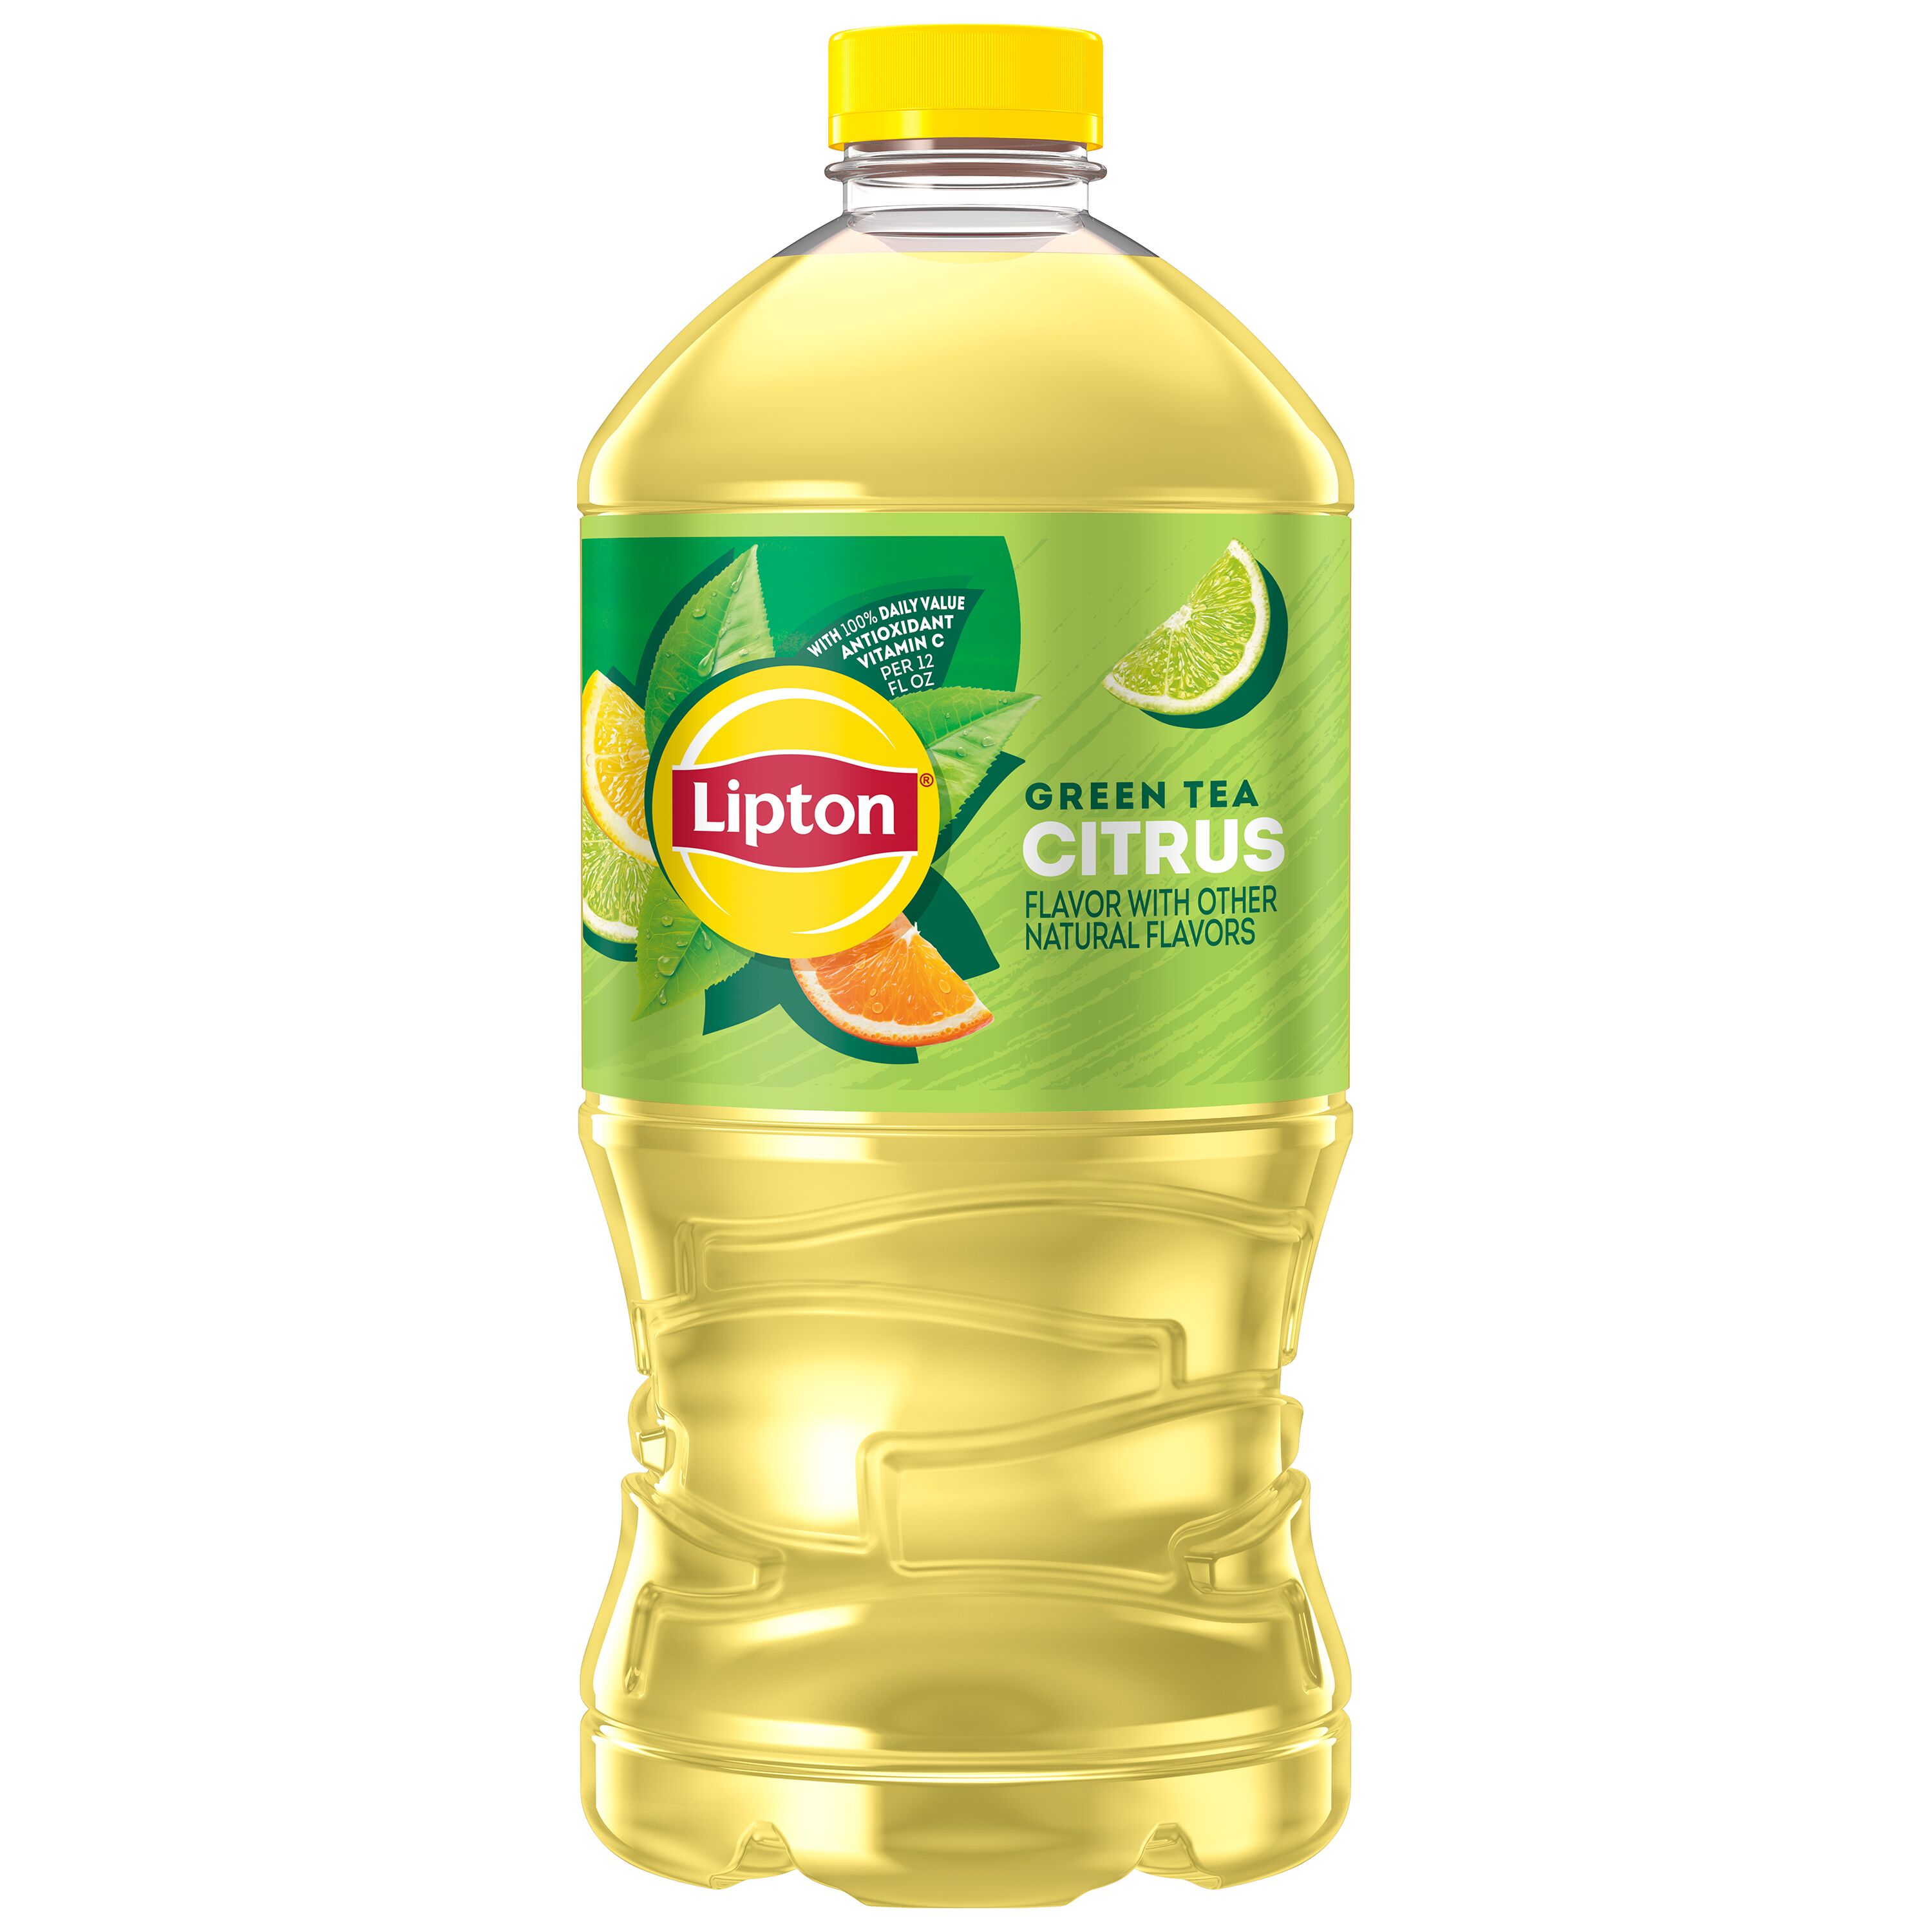 Lipton Green Tea Citrus Iced Tea, 64 fl oz Bottle - image 1 of 5